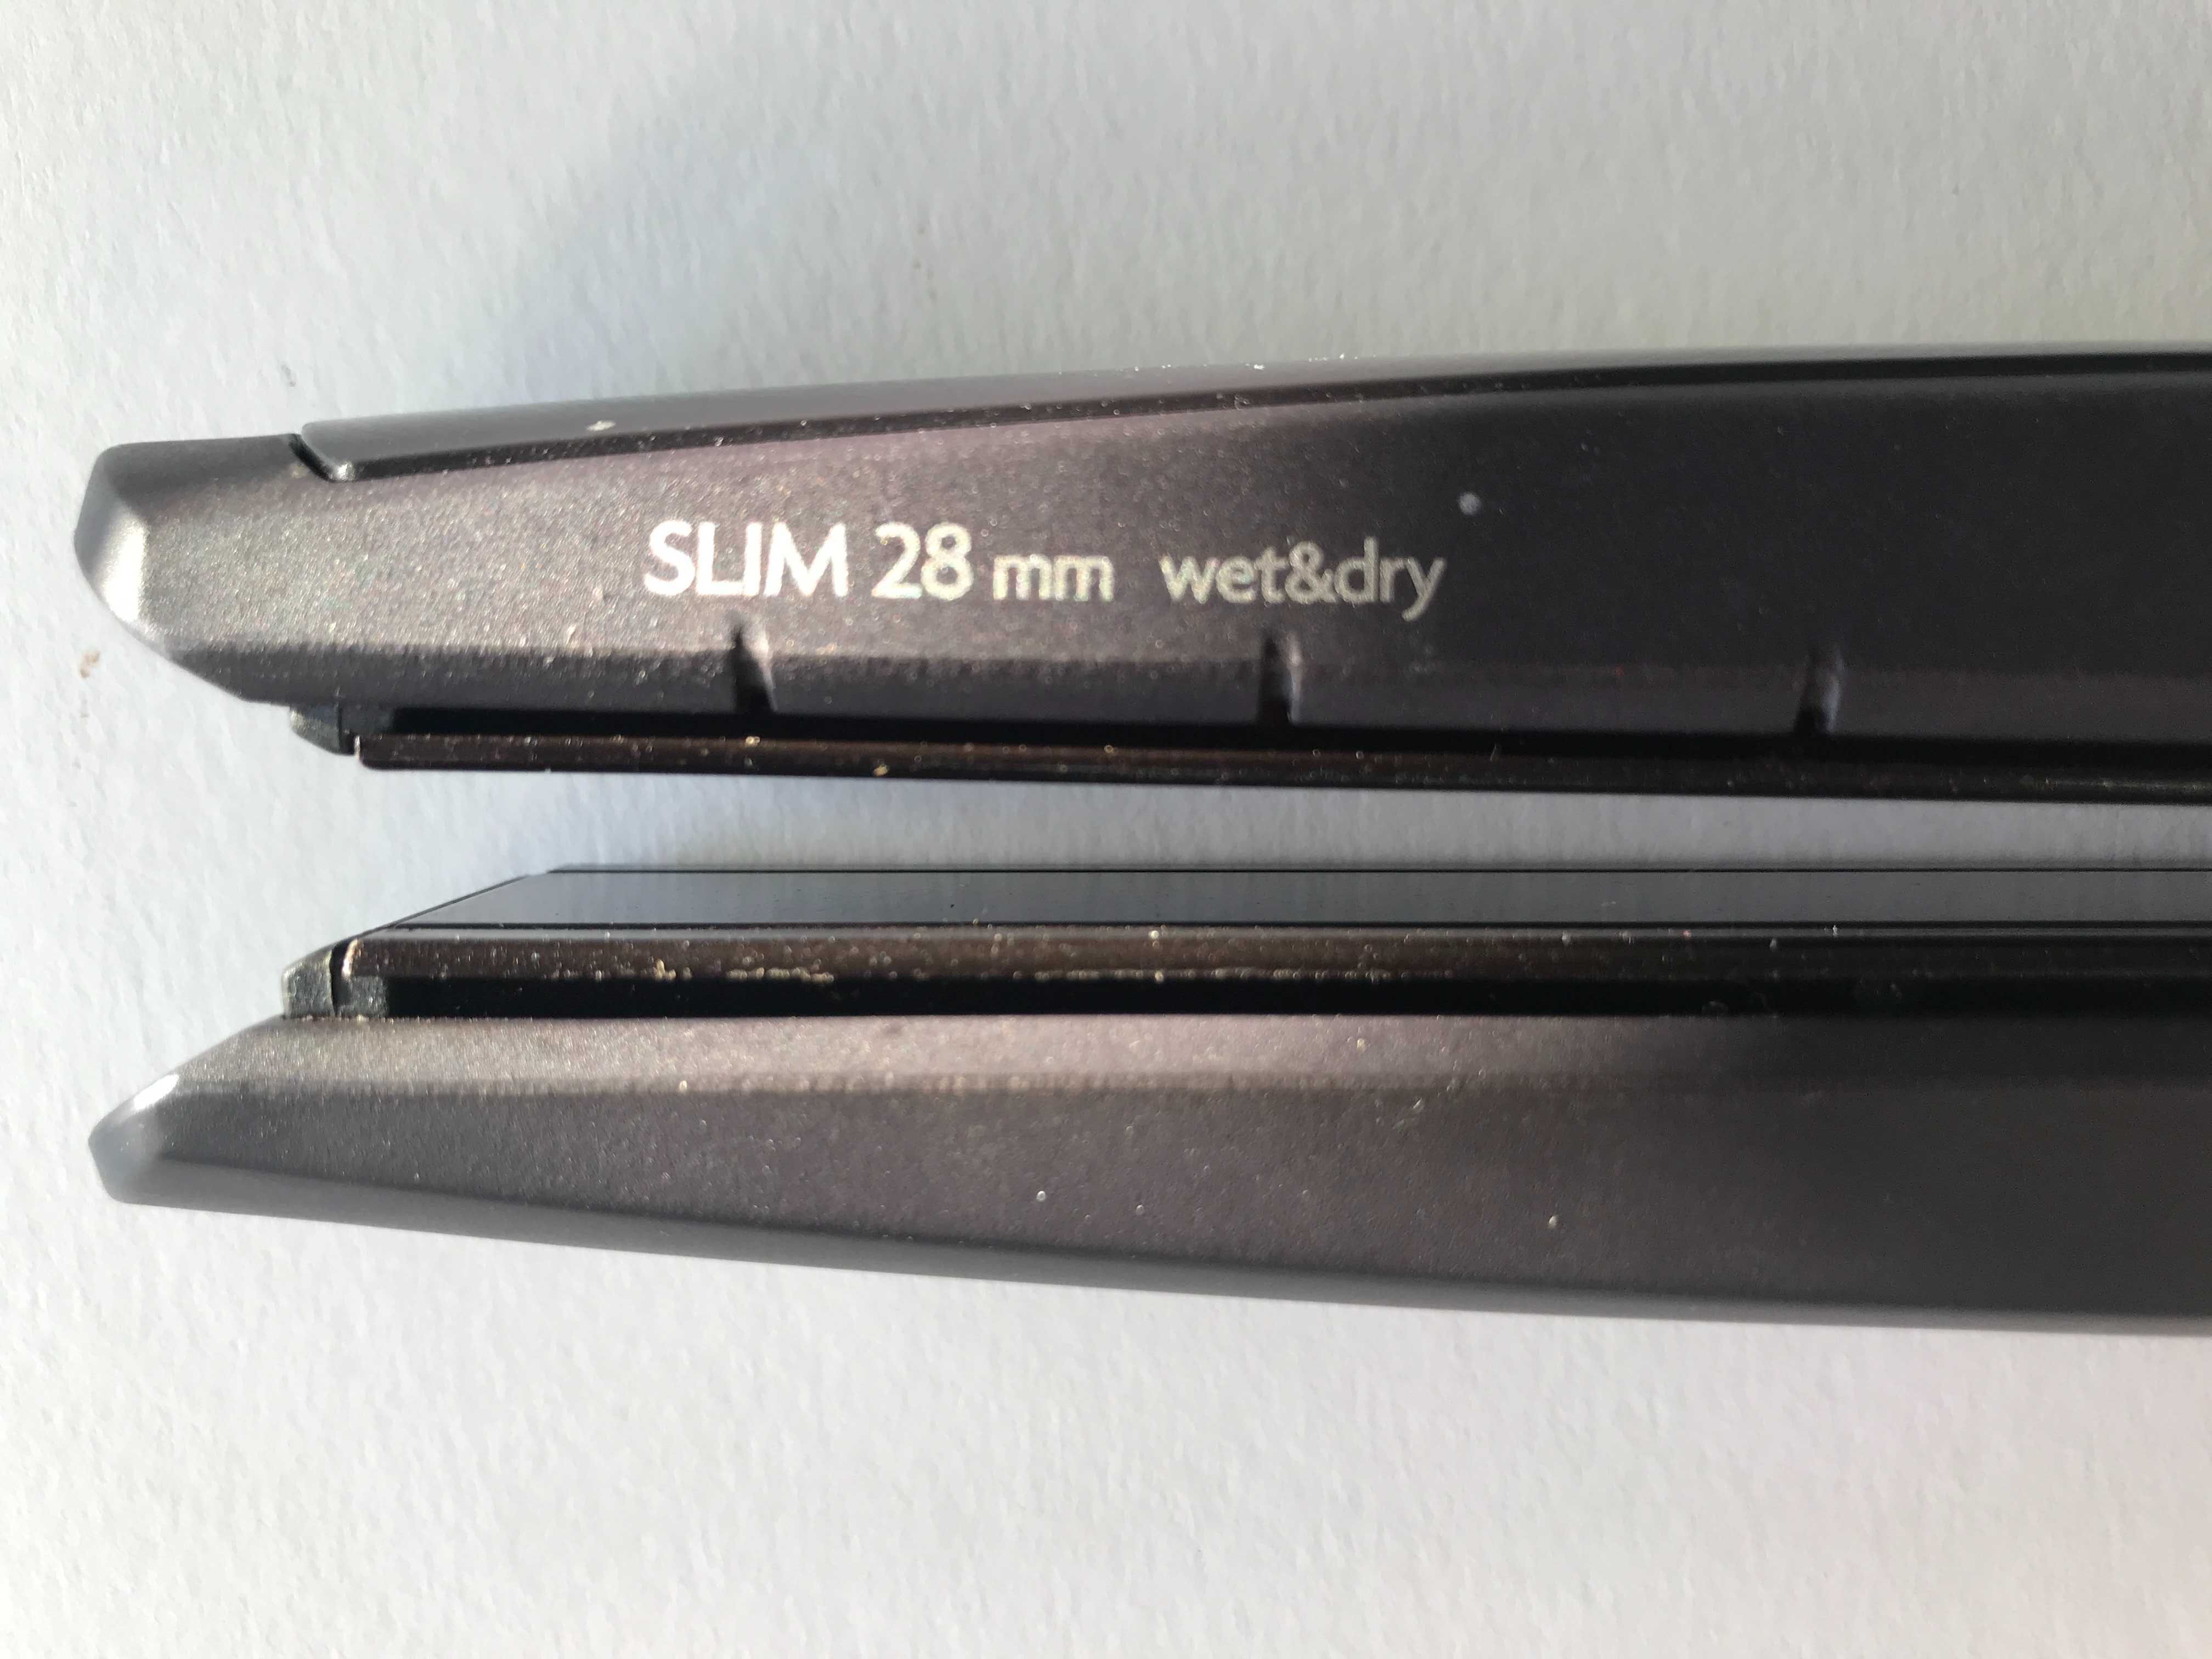 BaByliss Slim 28mm wet&dry